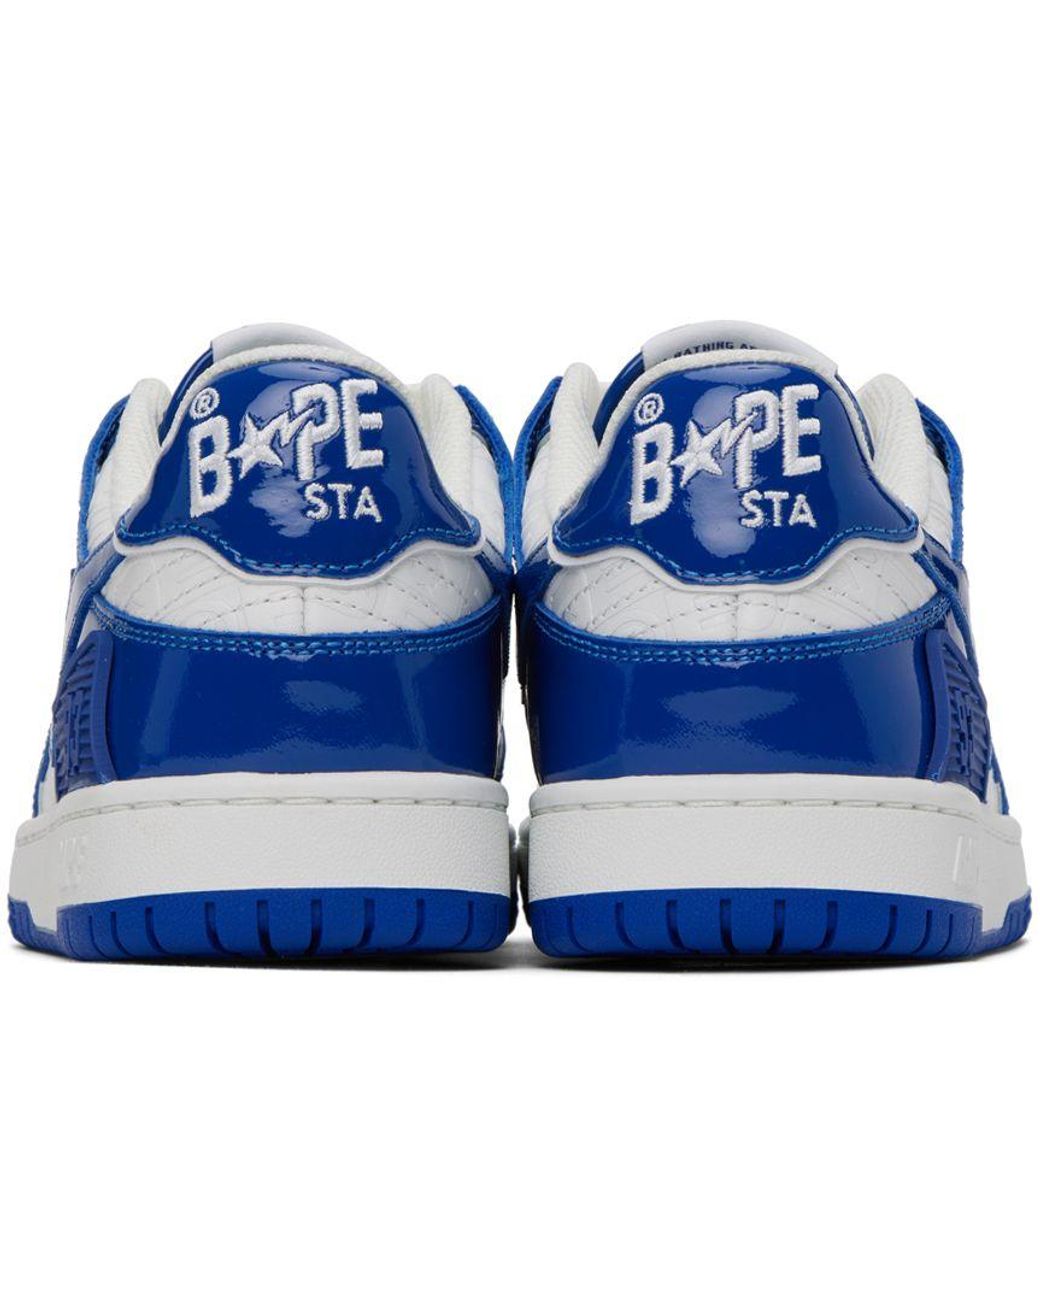 BAPE Womens Blue/White Leather SK8 Sta #5 Ladies - Blue x White / US 4 / Size: UK 3.5